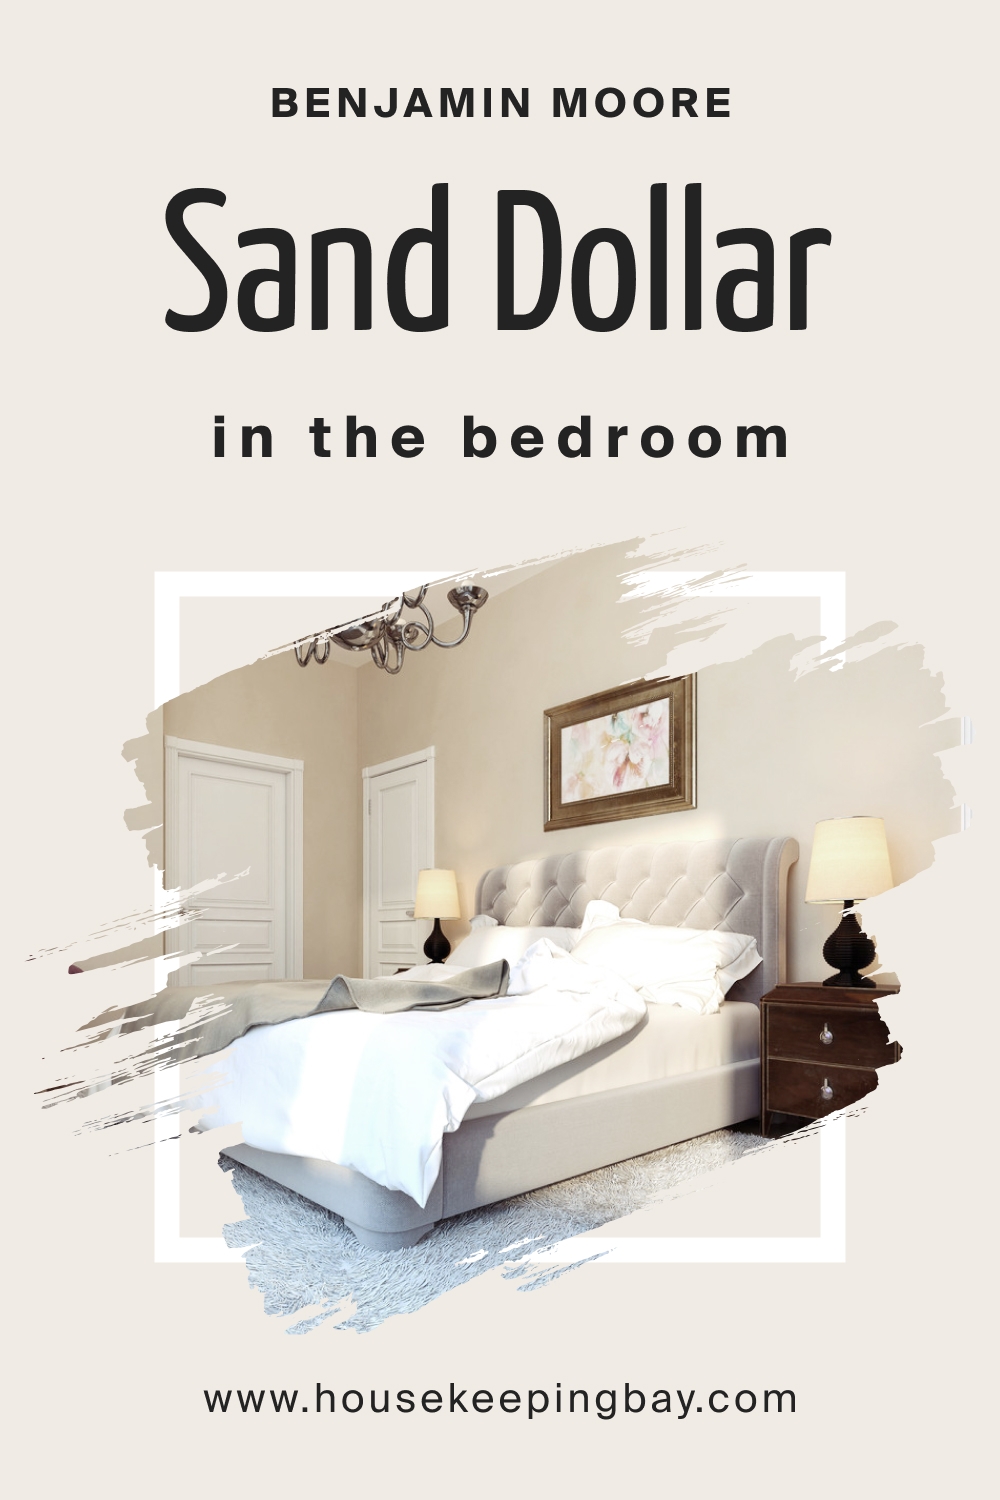 Benjamin Moore. Sand Dollar OC 71 for the Bedroom